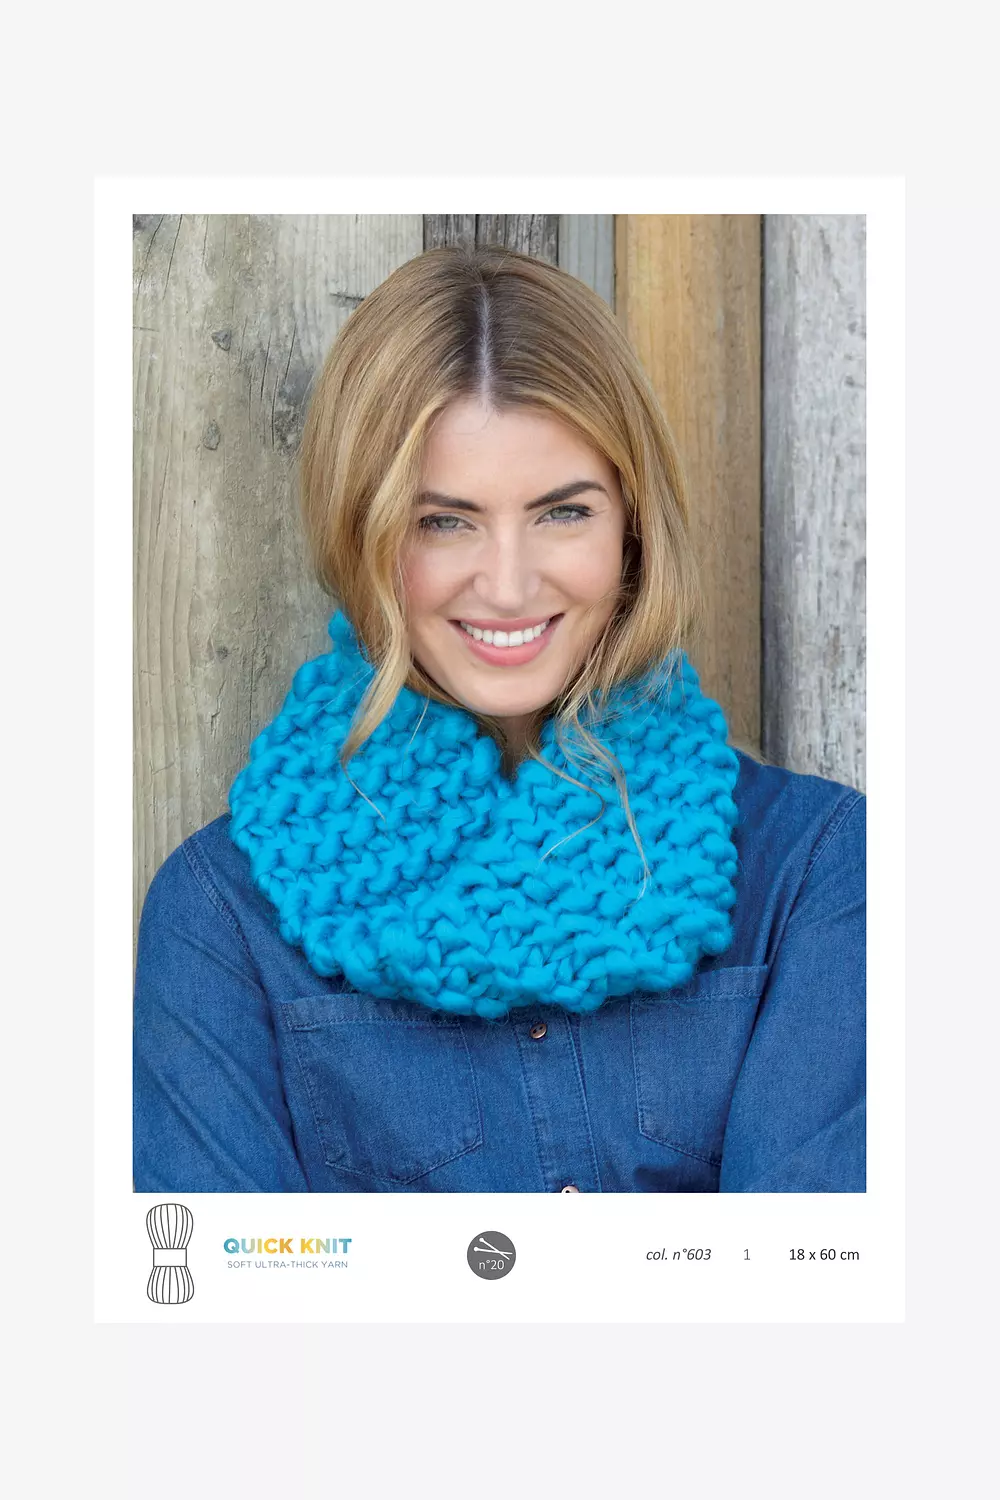 Ovillos de lana y algodón para tejer a ganchillo o tricot - en Oferta –  Idealium Knitting